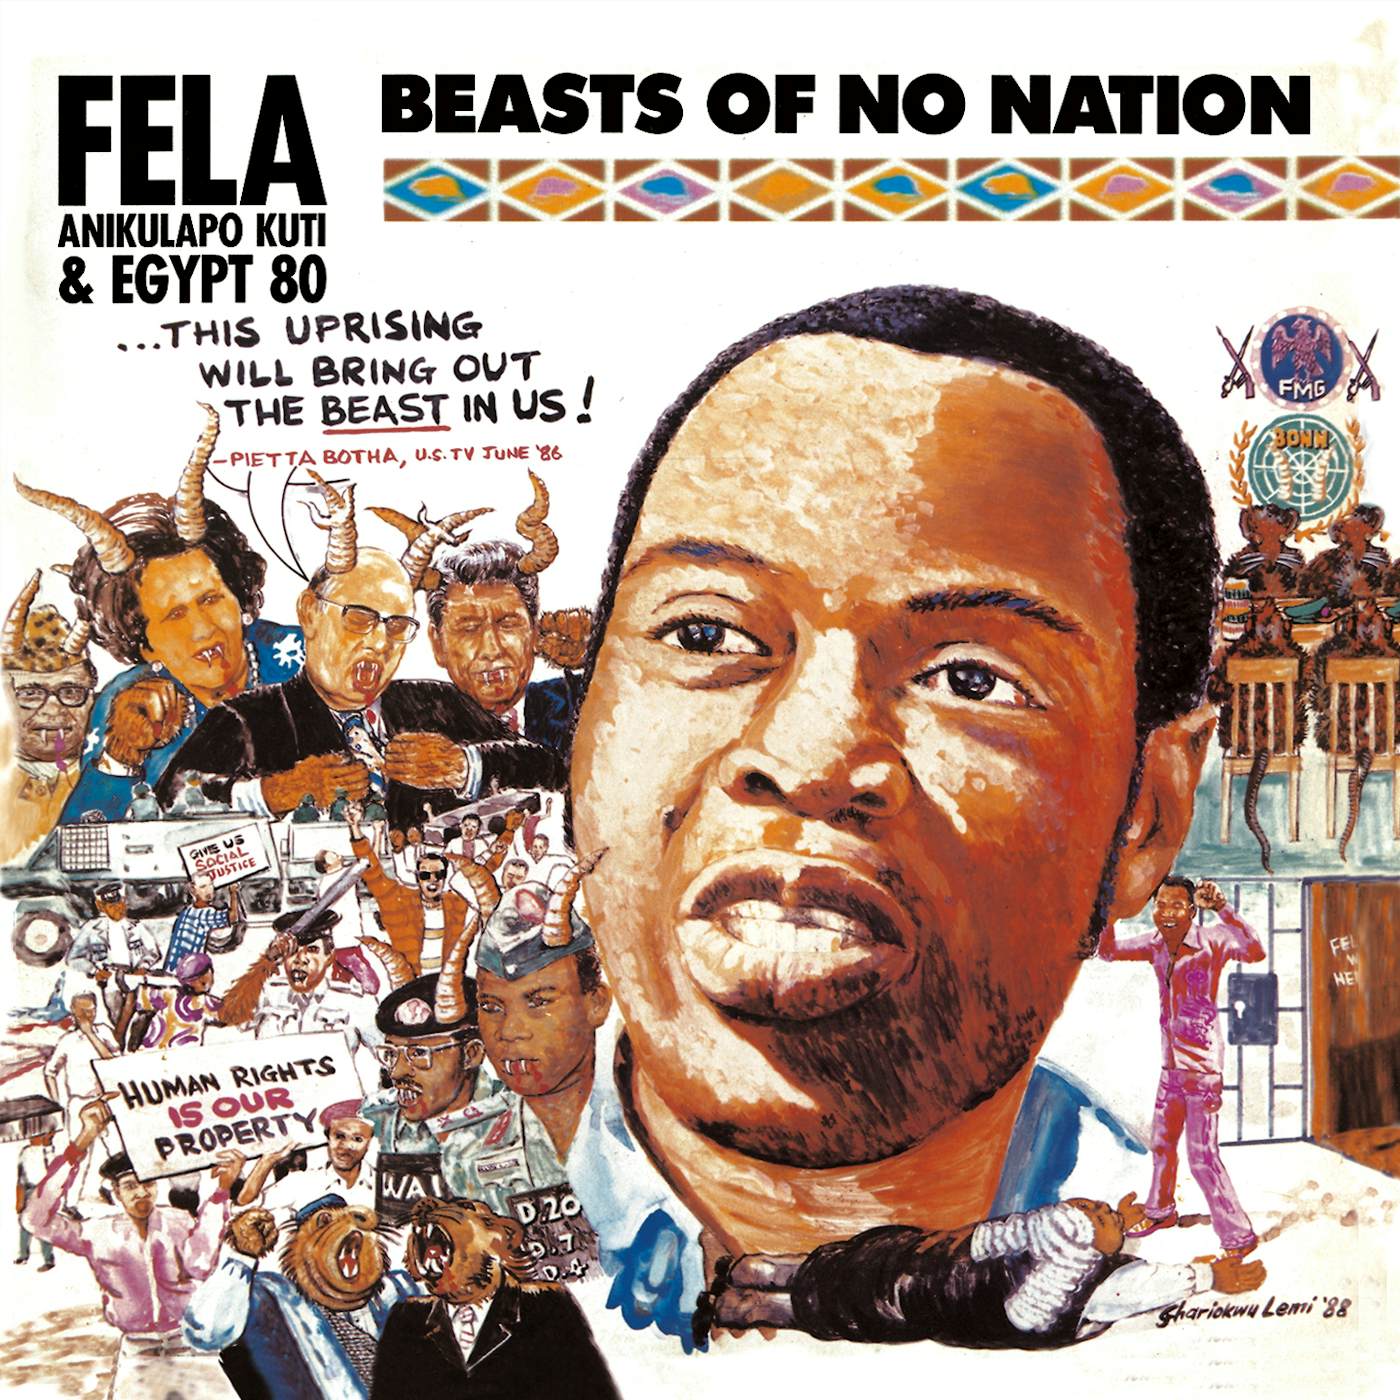 Fela Kuti Beasts of No Nation Vinyl Record